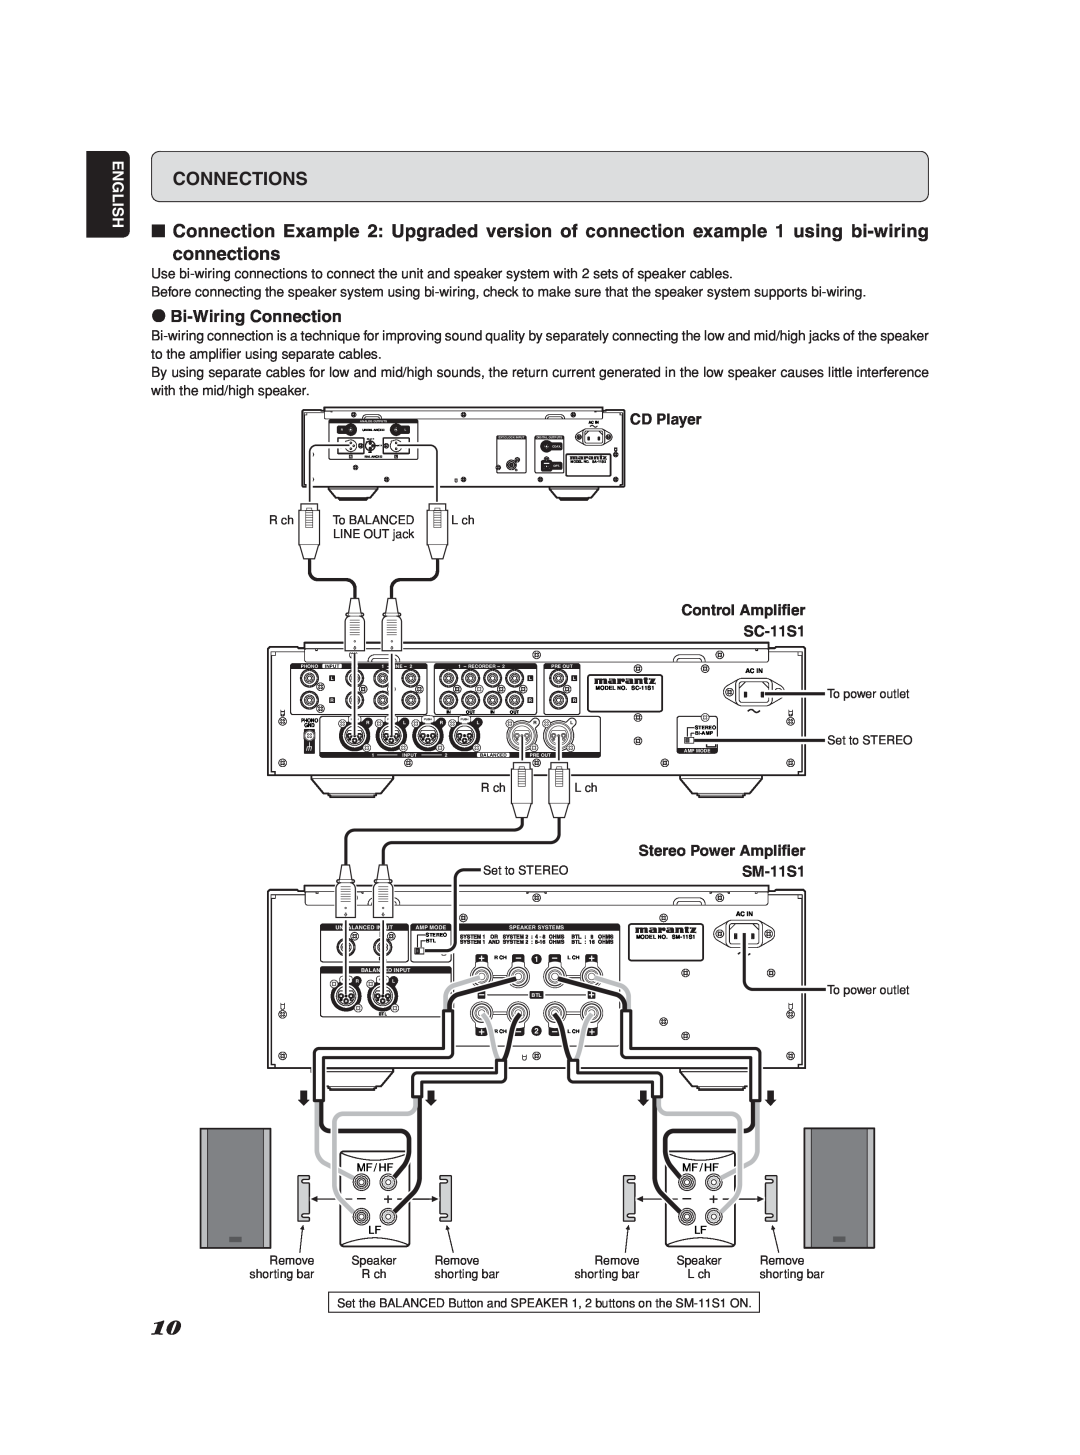 Marantz SM-1151 connections, ¶Bi-WiringConnection, Stereo Power Ampliﬁer, SM-11S1, Connections, English, Control Ampliﬁer 